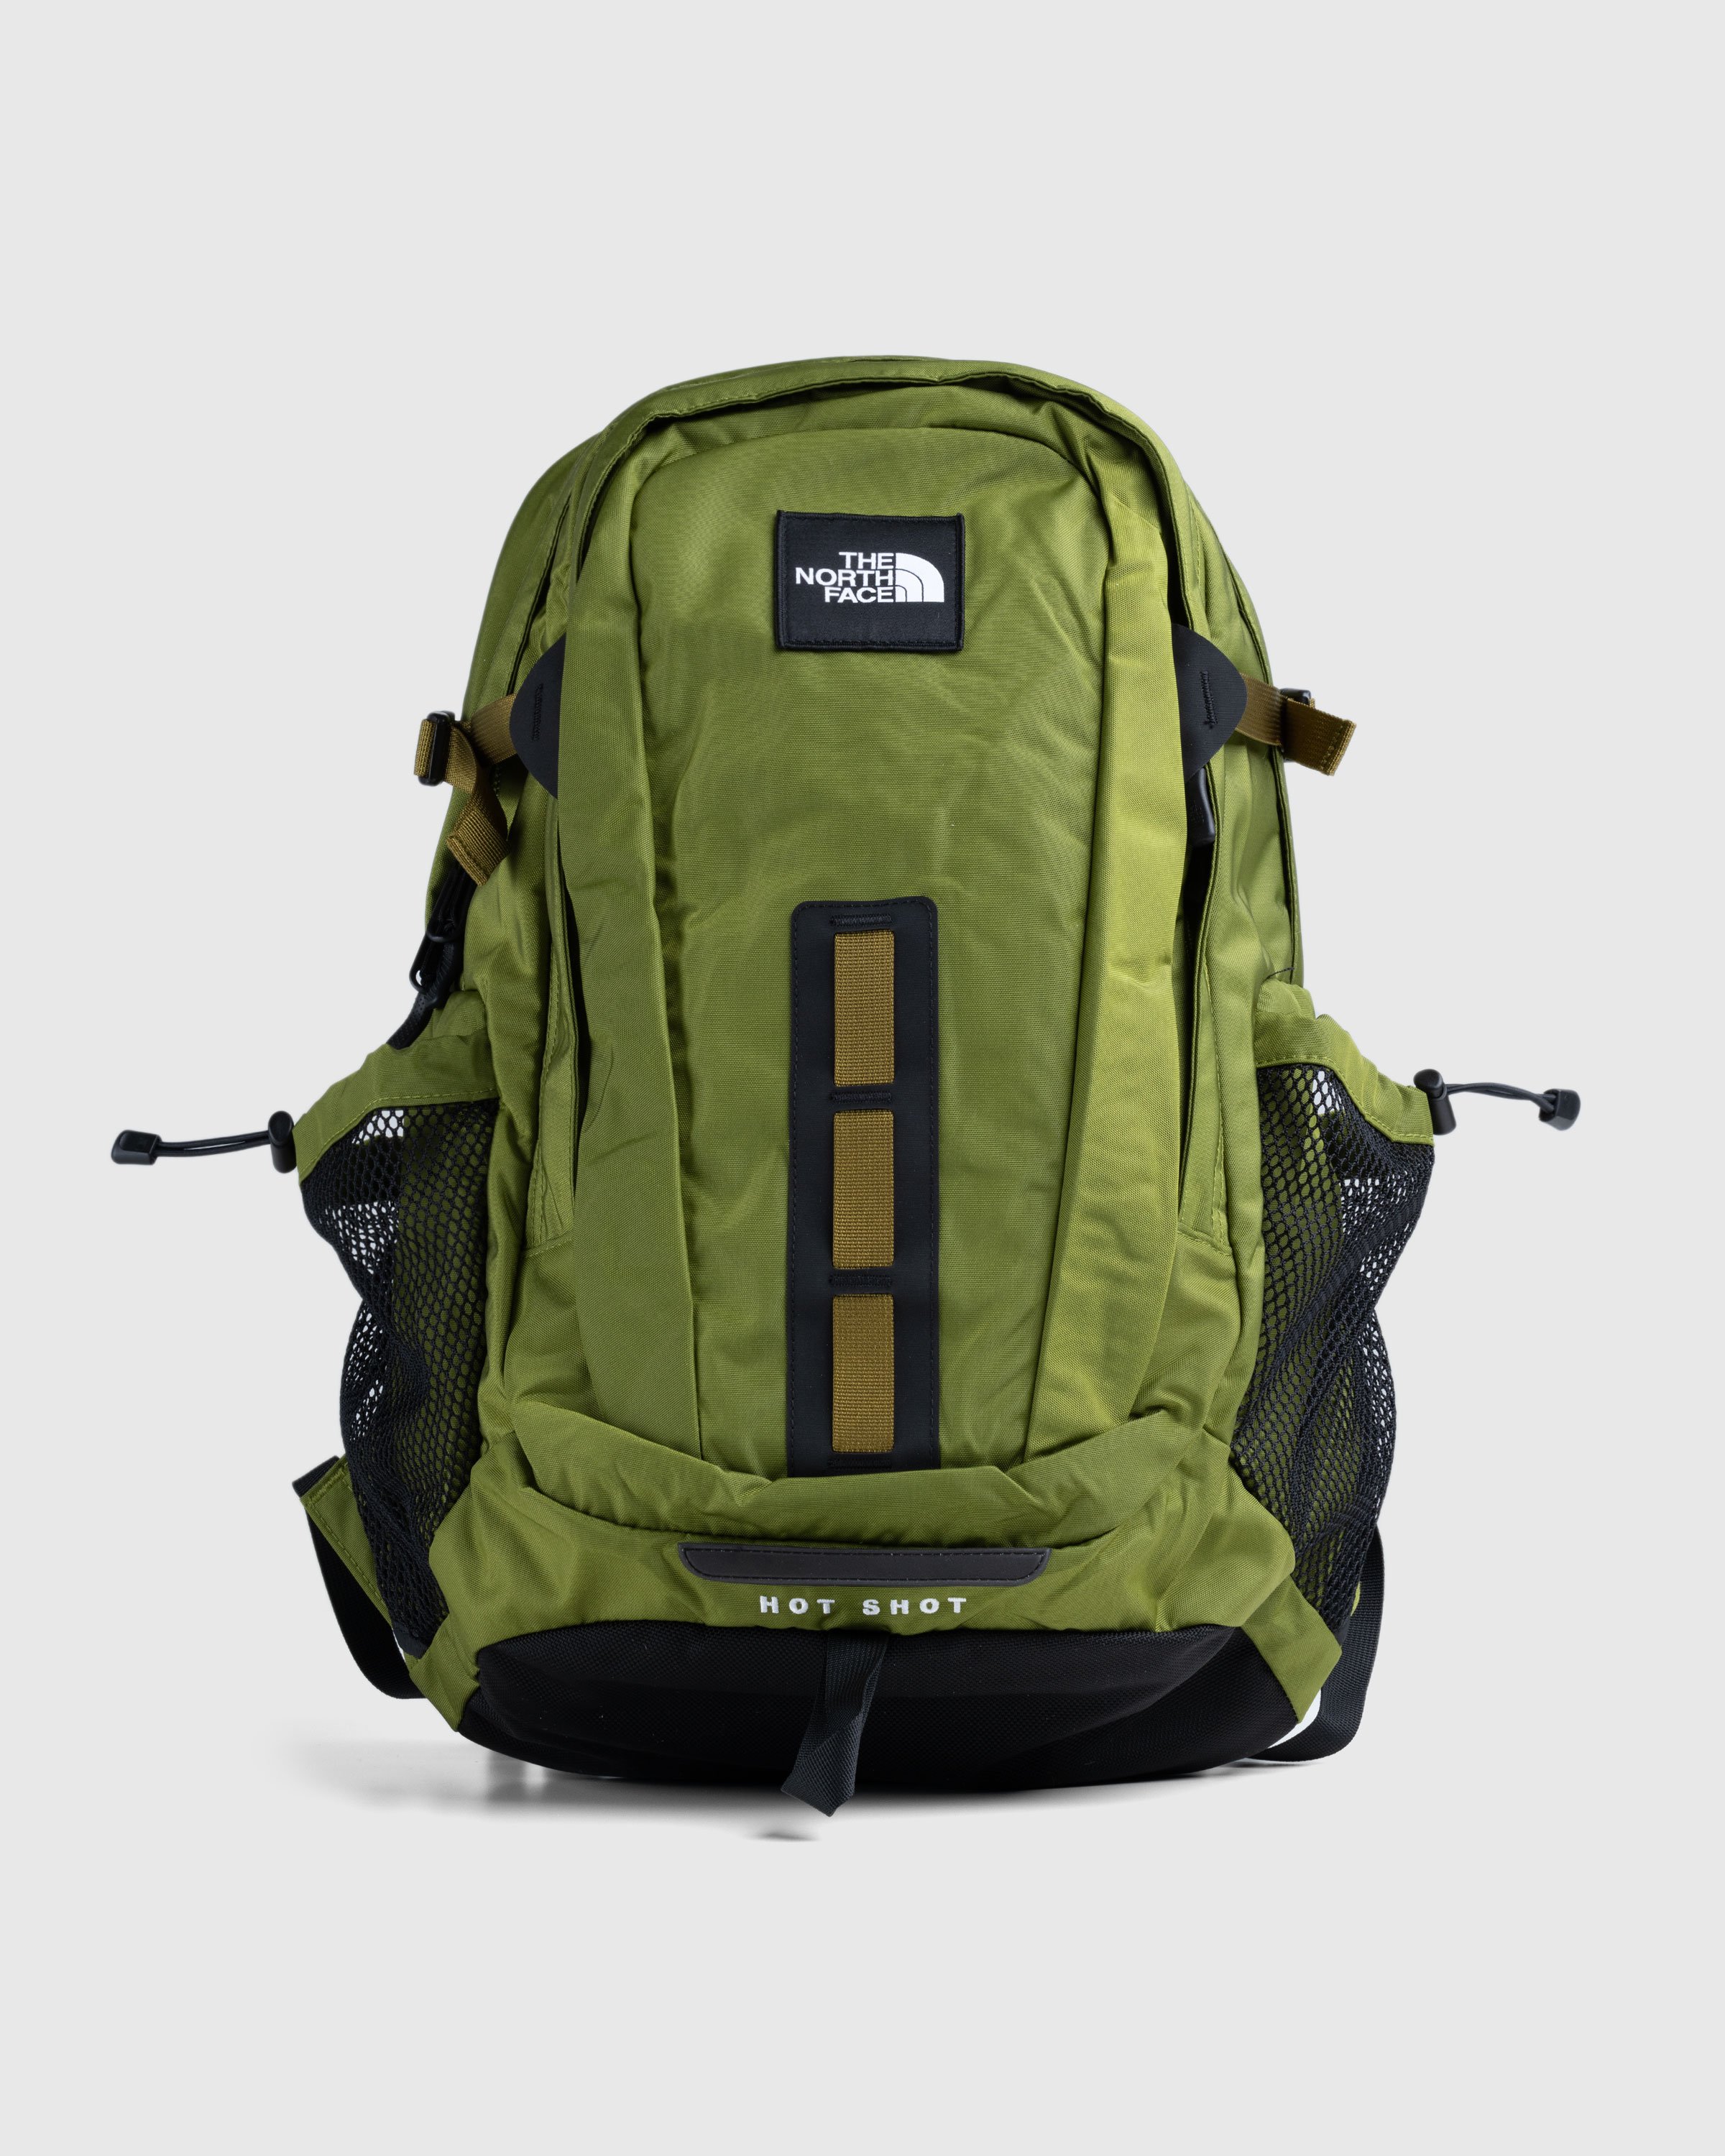 The North Face - Hot Shot Backpack Calla Green/Fir Green - Accessories - Green - Image 1